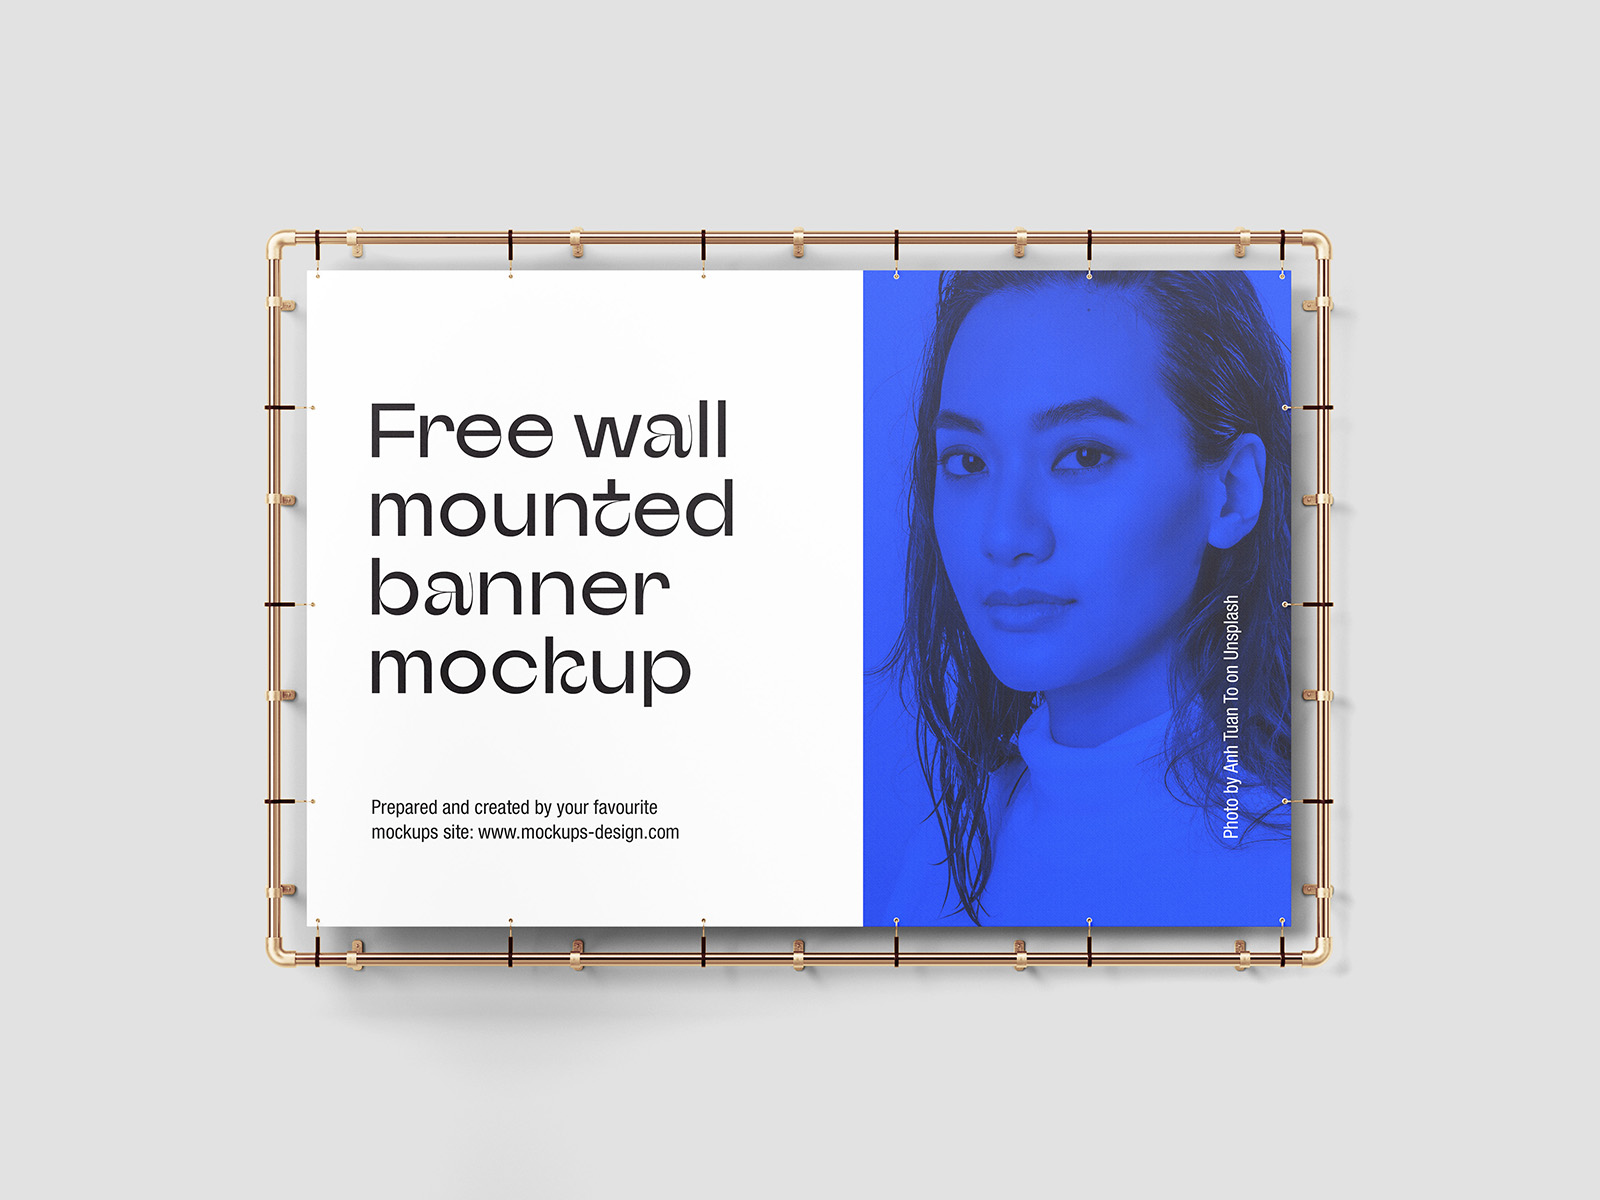 Wall mounted banner mockup / 300x200 cm